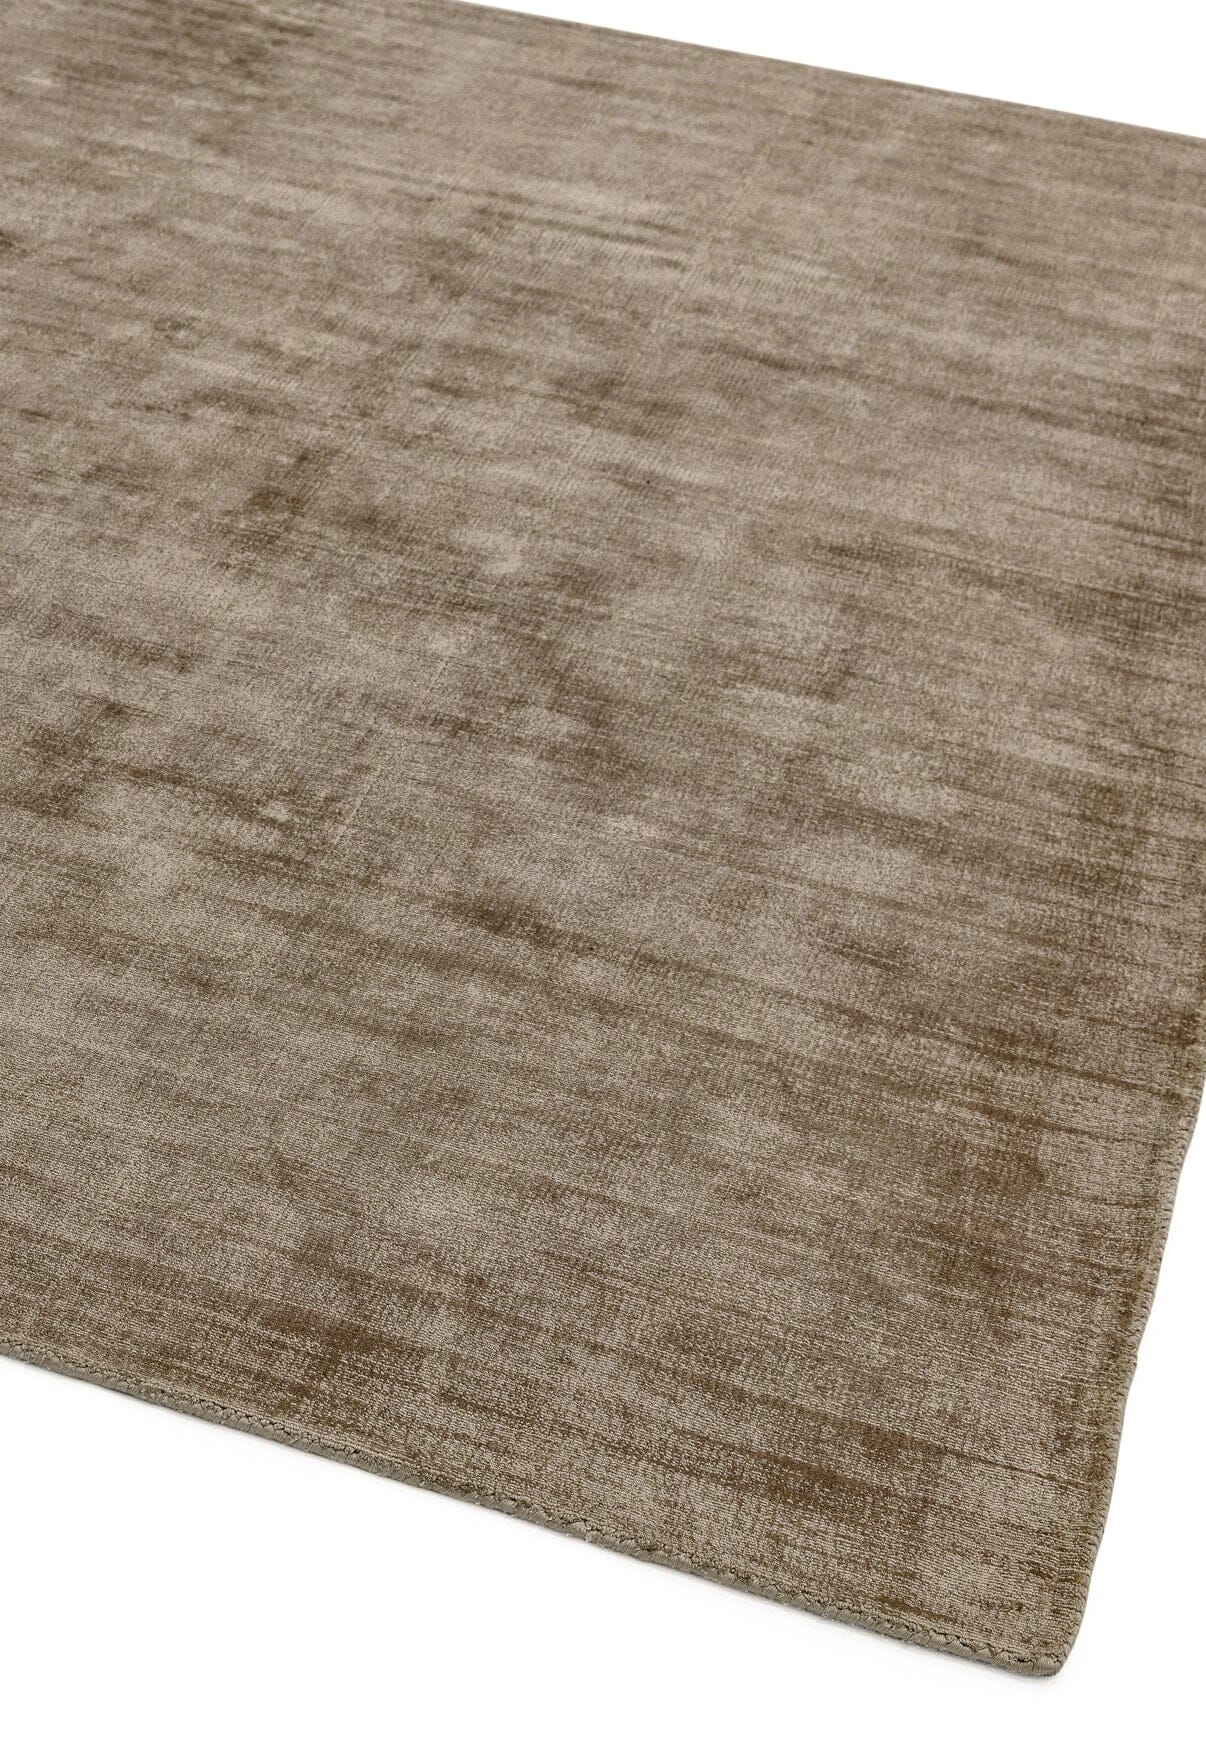 Asiatic Carpets Blade Hand Woven Rug Mocha - 240 x 340cm